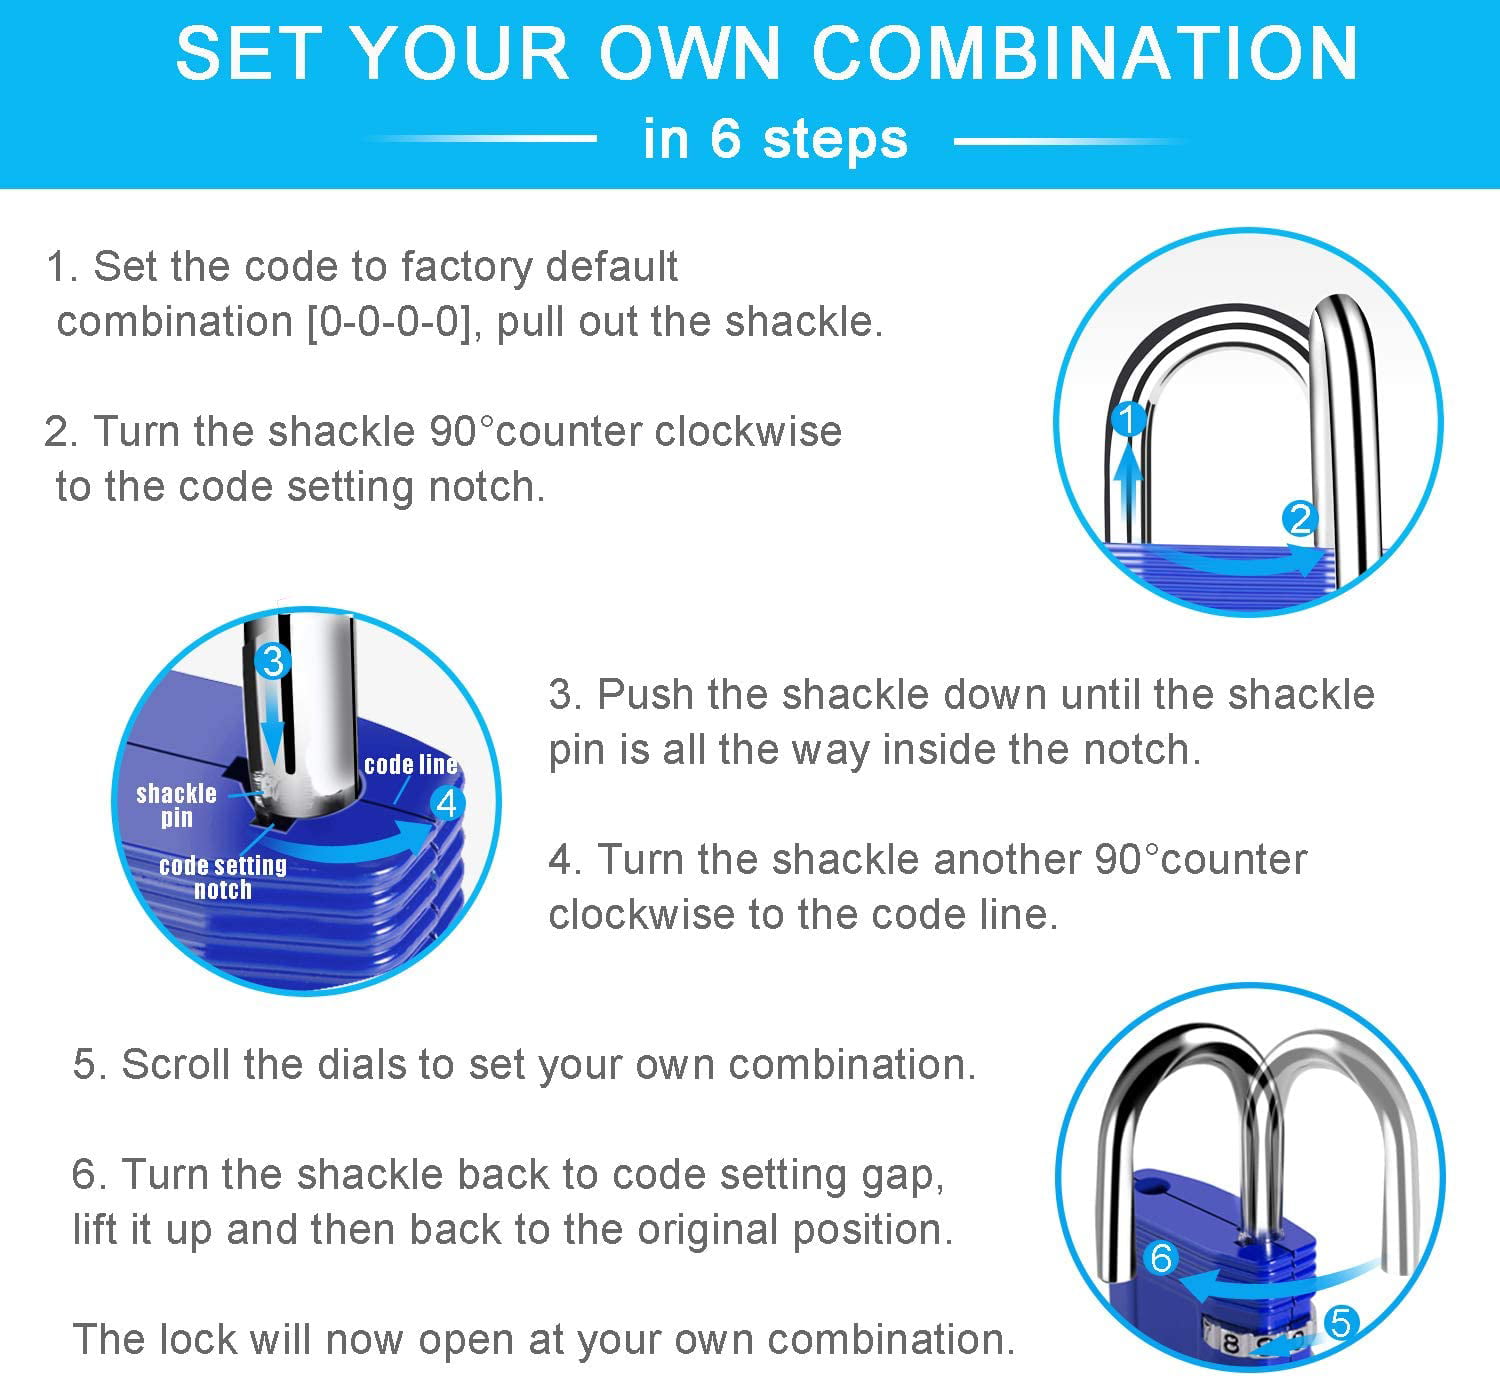 4 Digit Combination Lock for Gym Locker Weatherproof Padlock Outdoor for Fence Gate School Locker Blue Sheds ZHEGE Combination Padlock for Locker